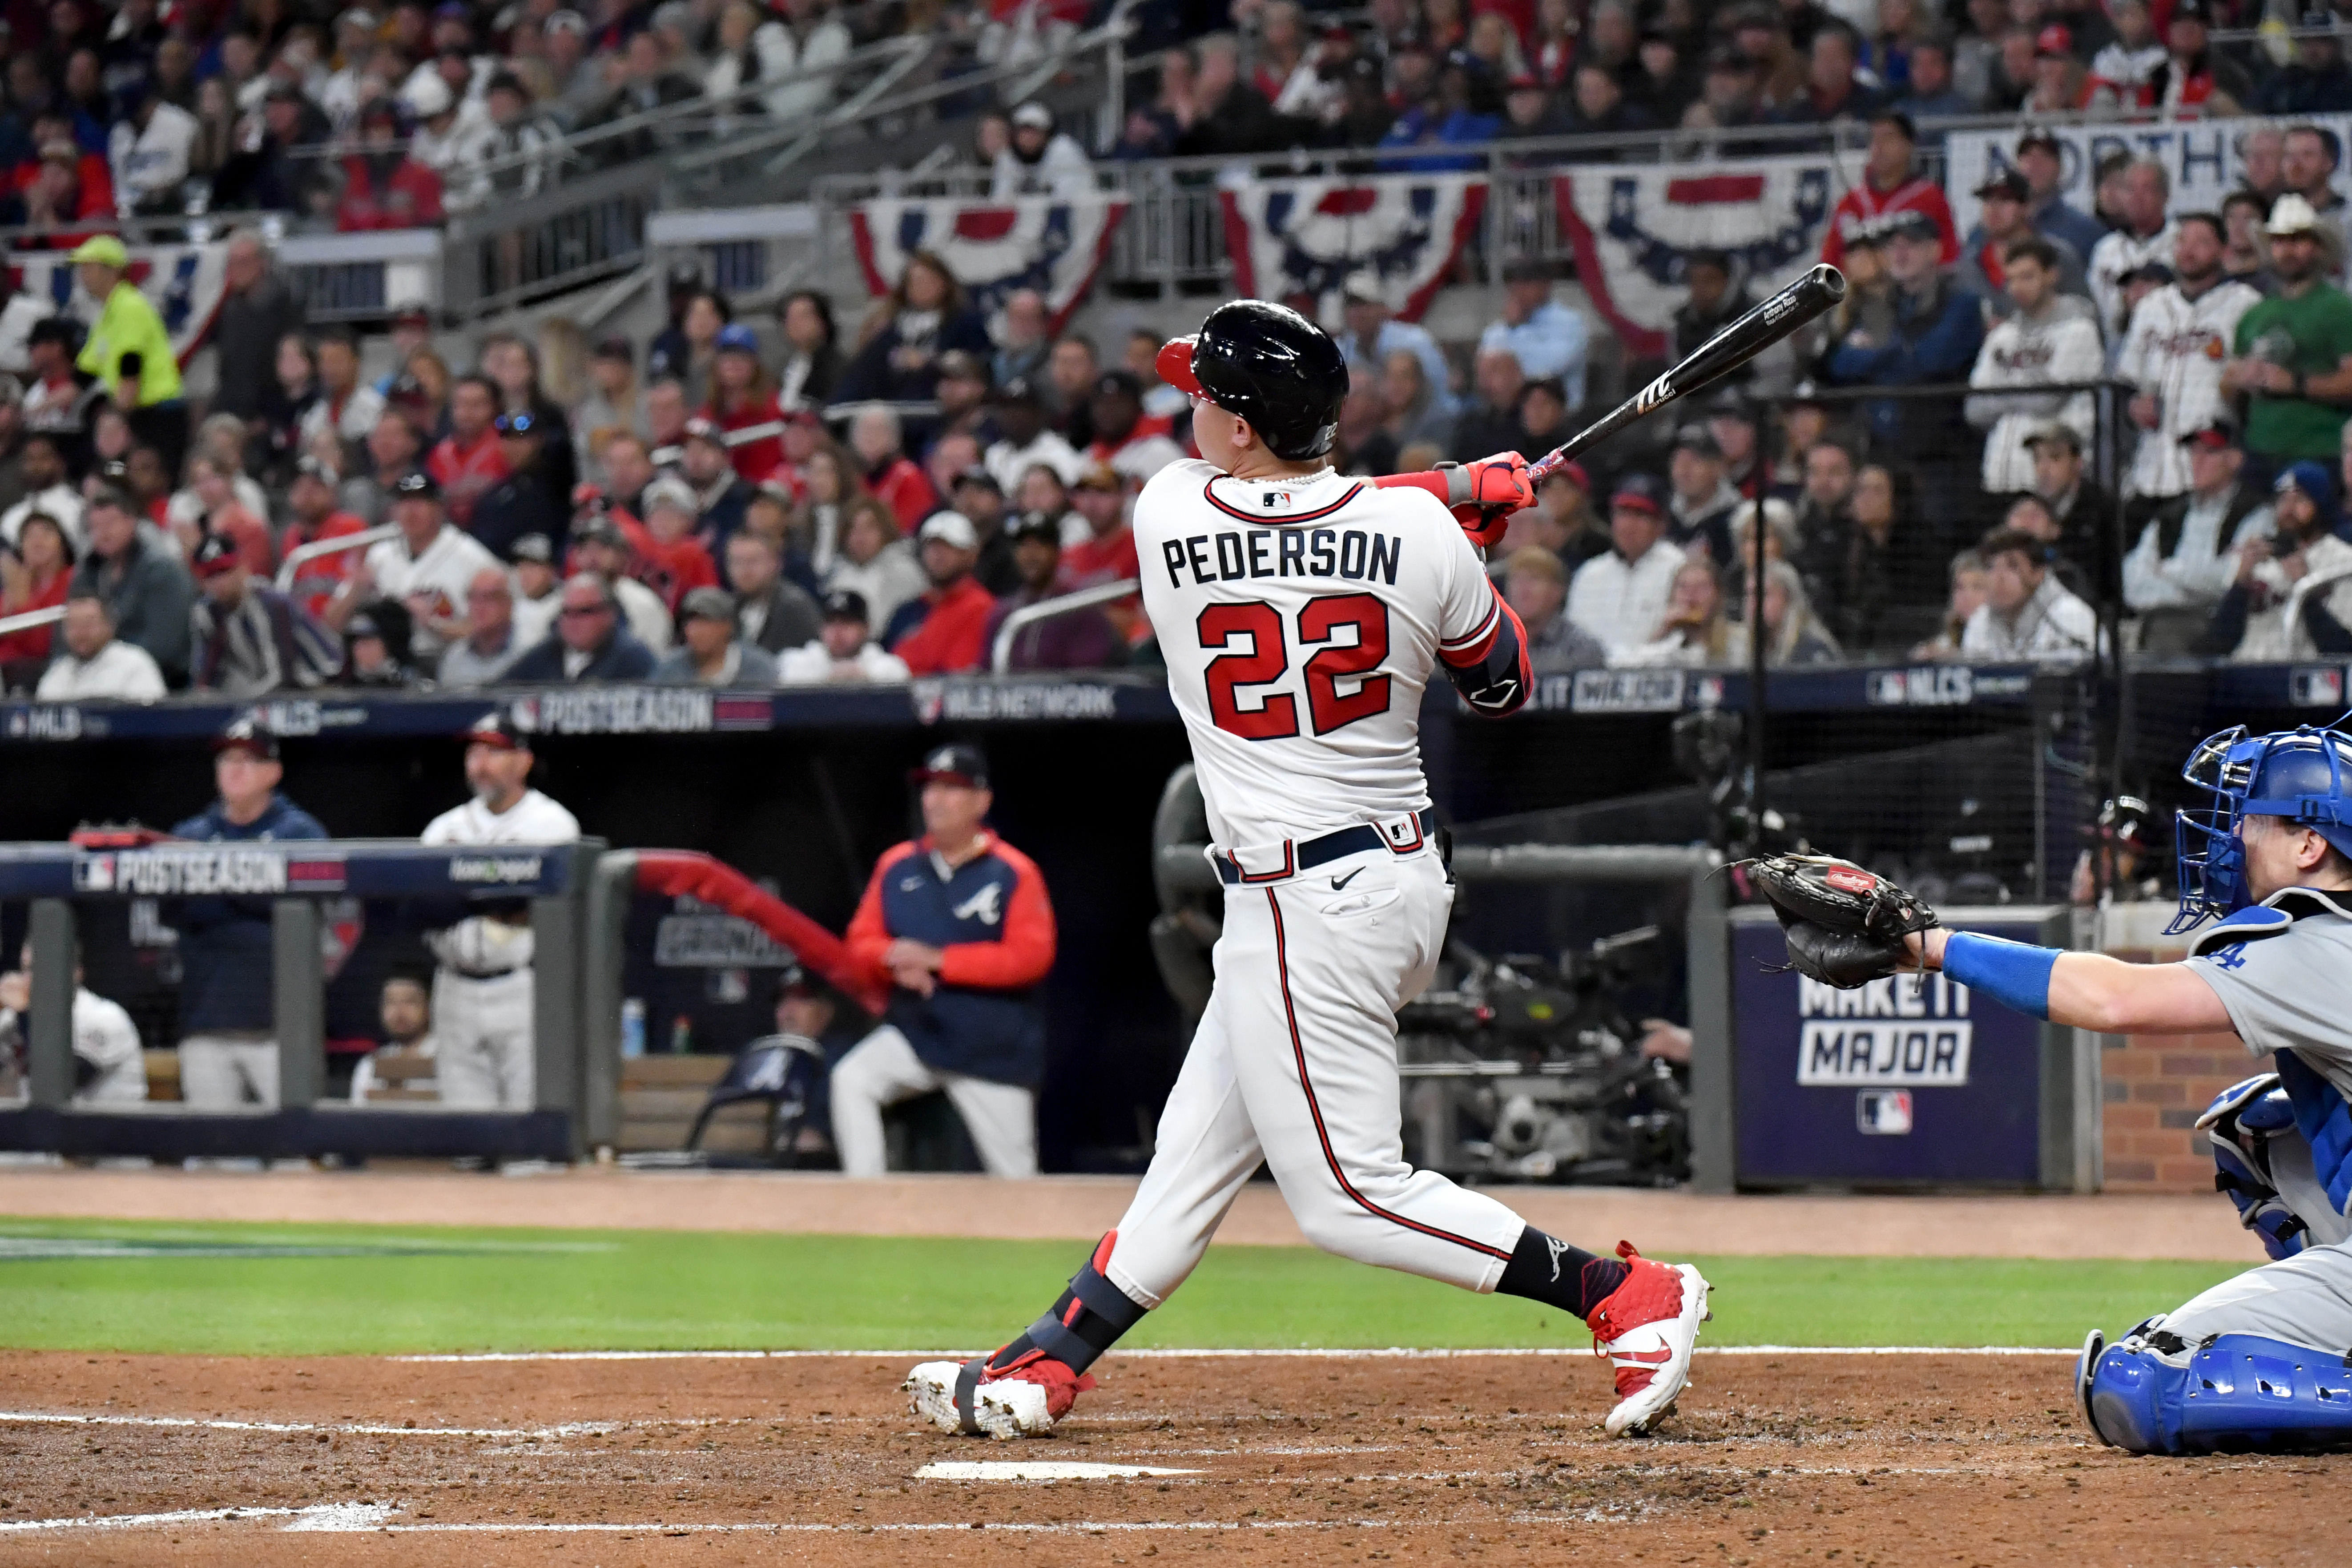 Joc Pederson's pearls: Necklace is talk of MLB playoffs, Atlanta Braves